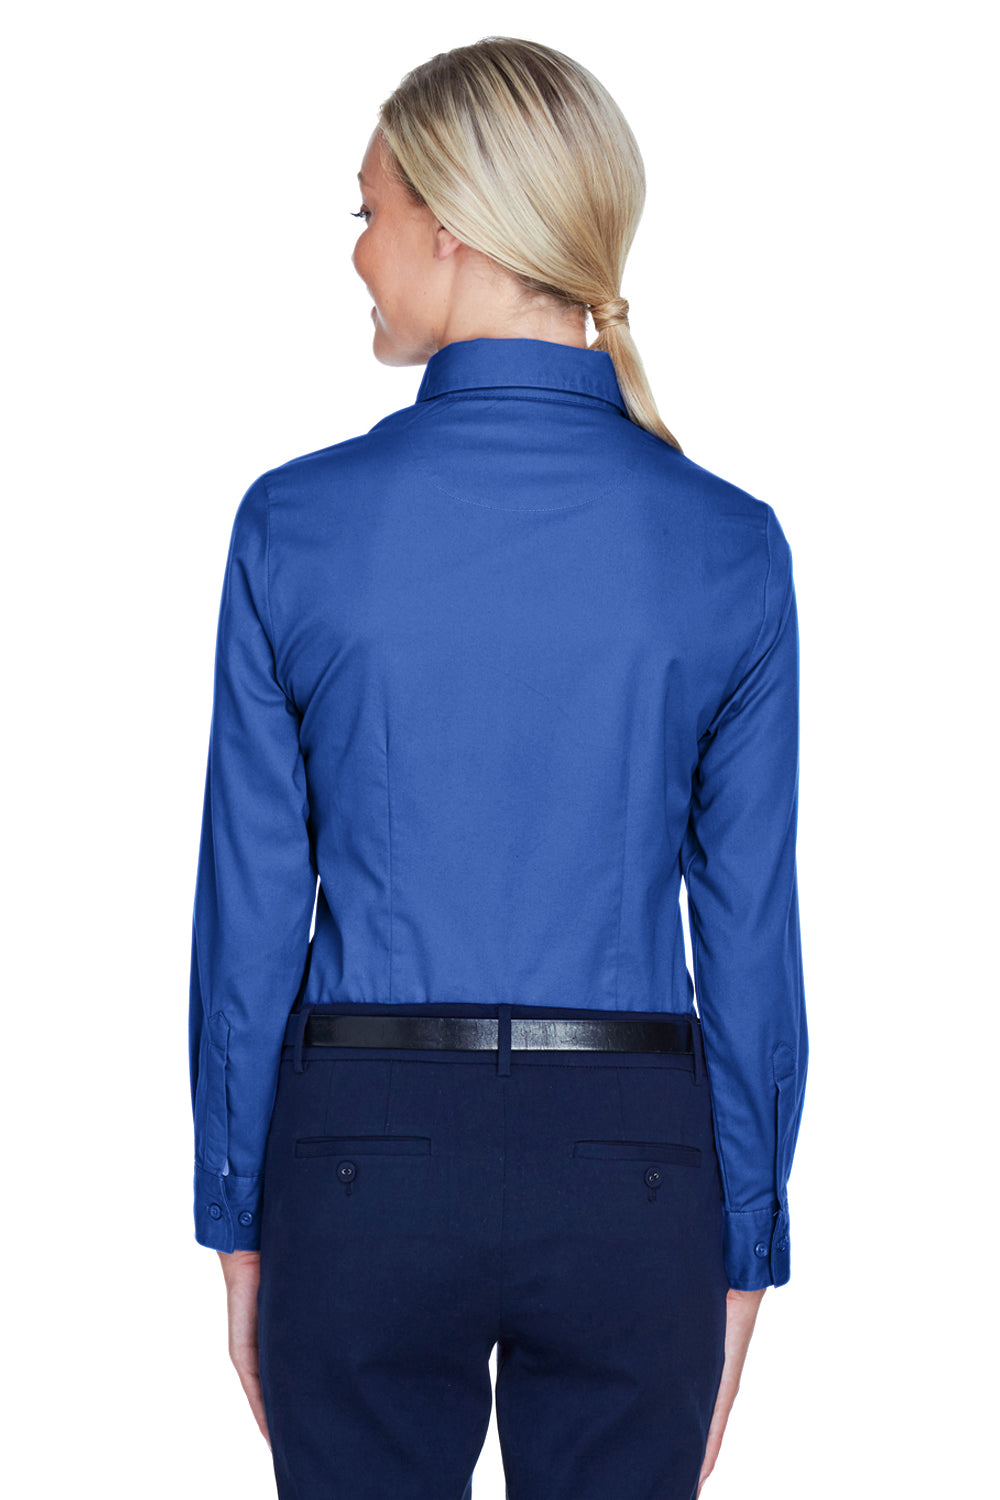 UltraClub 8976 Womens Whisper Long Sleeve Button Down Shirt Royal Blue Back